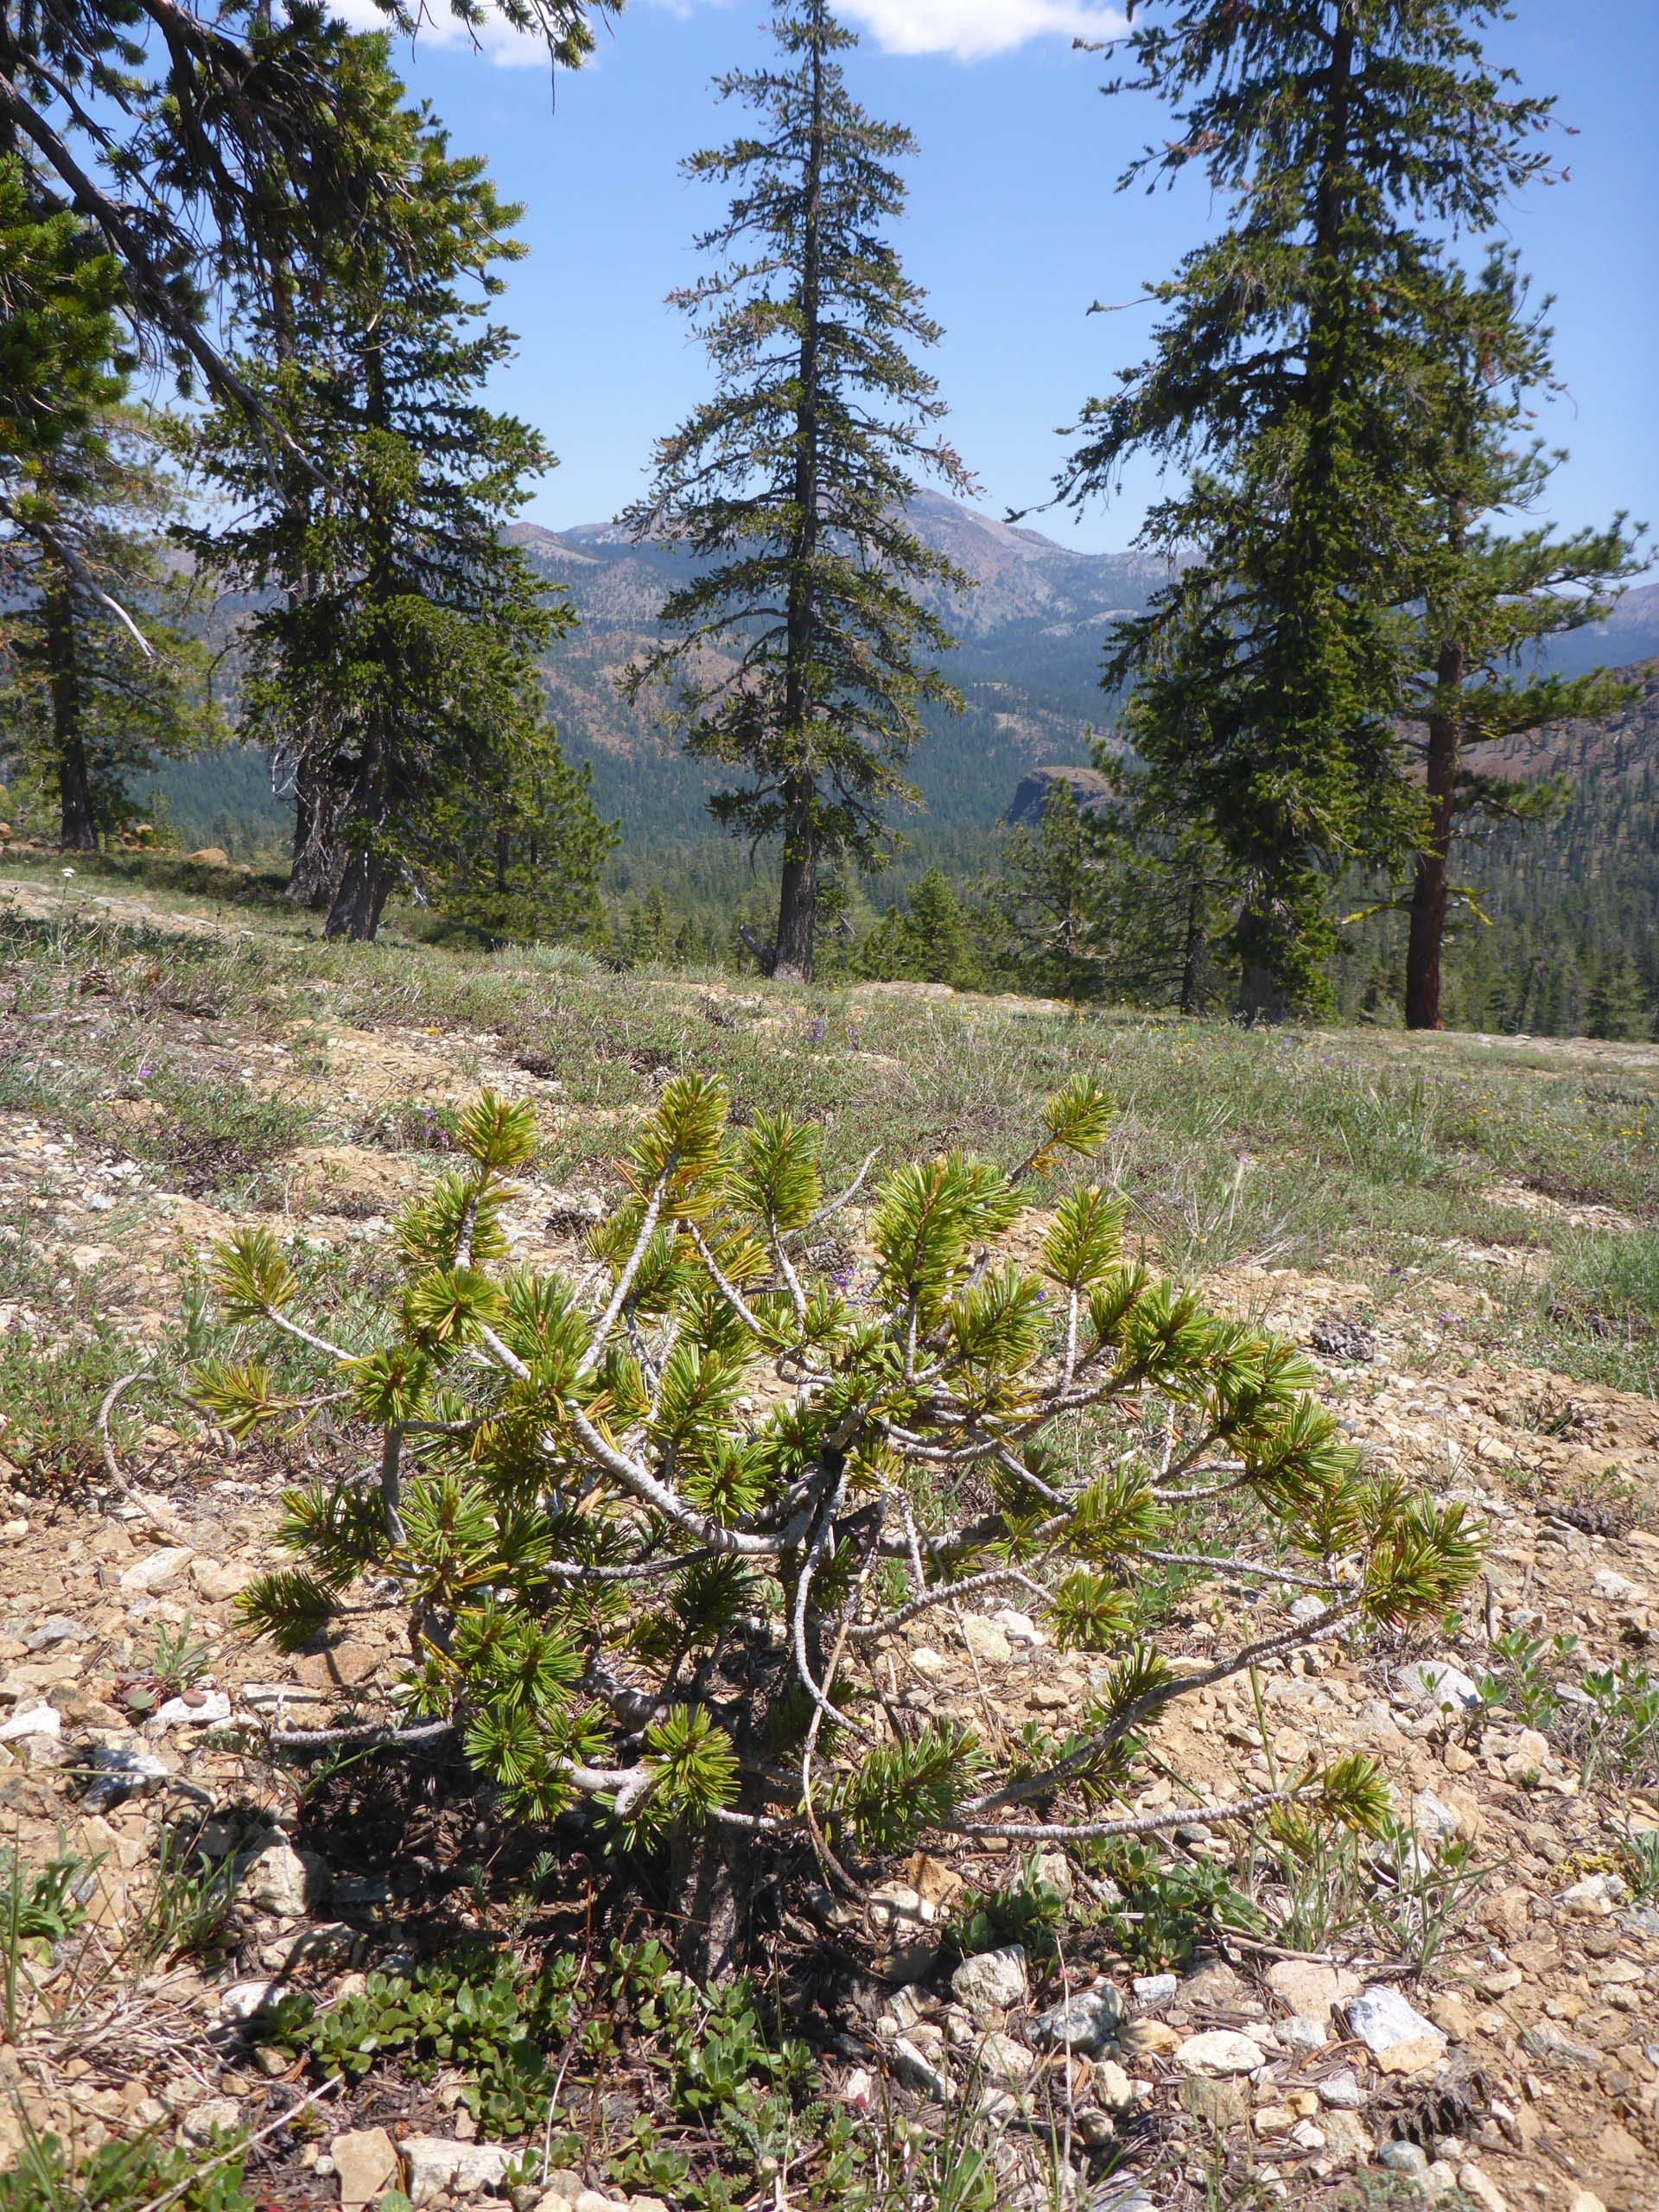 Foxtail pines. D. Burk.